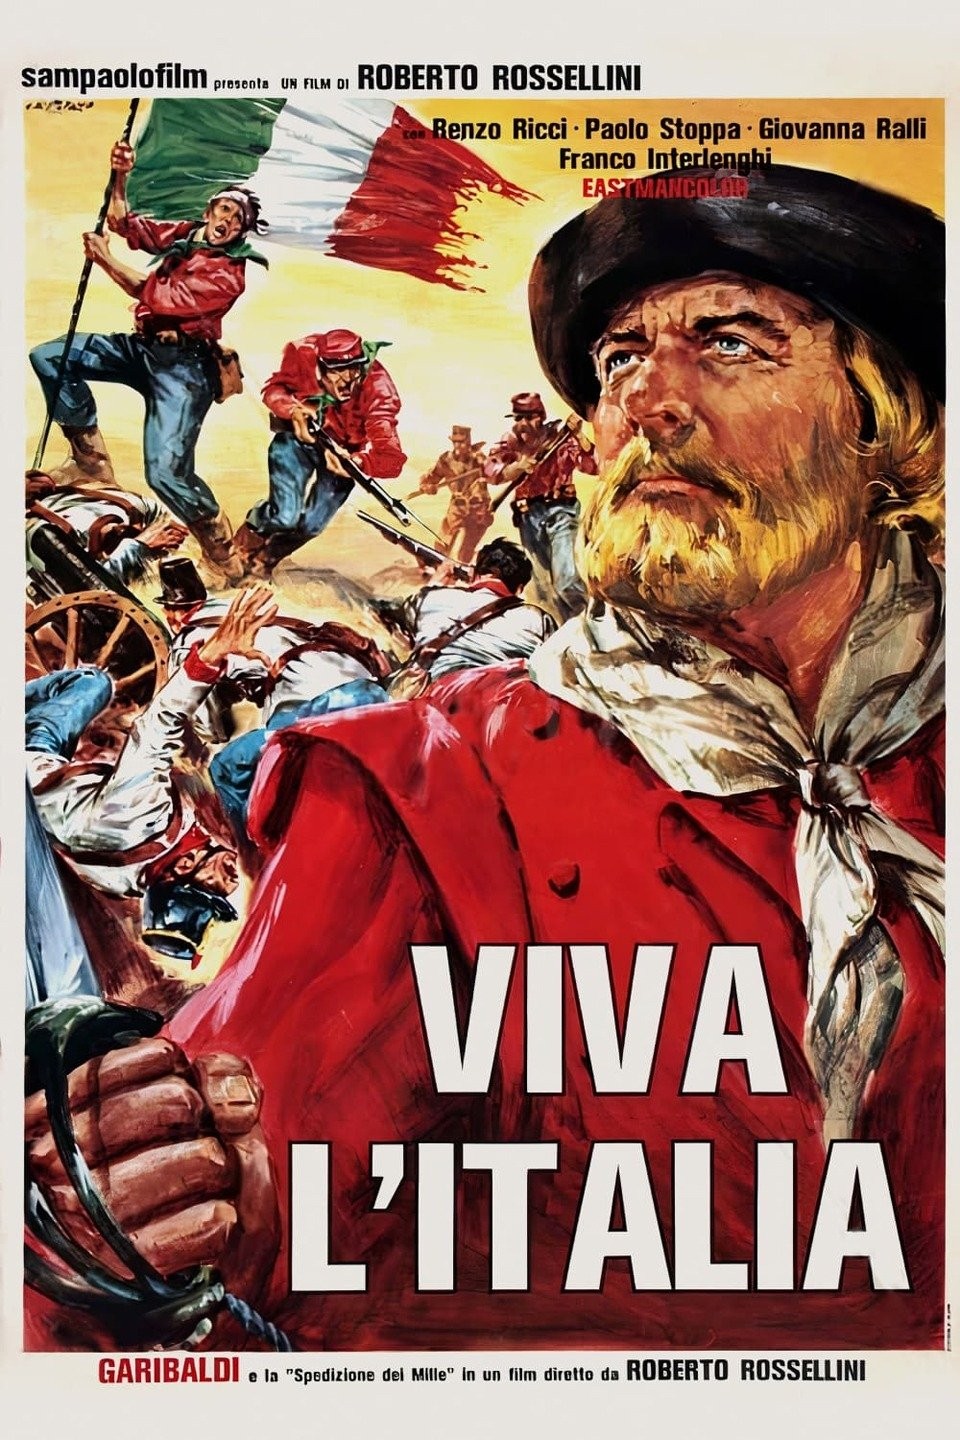 Viva l'italiano